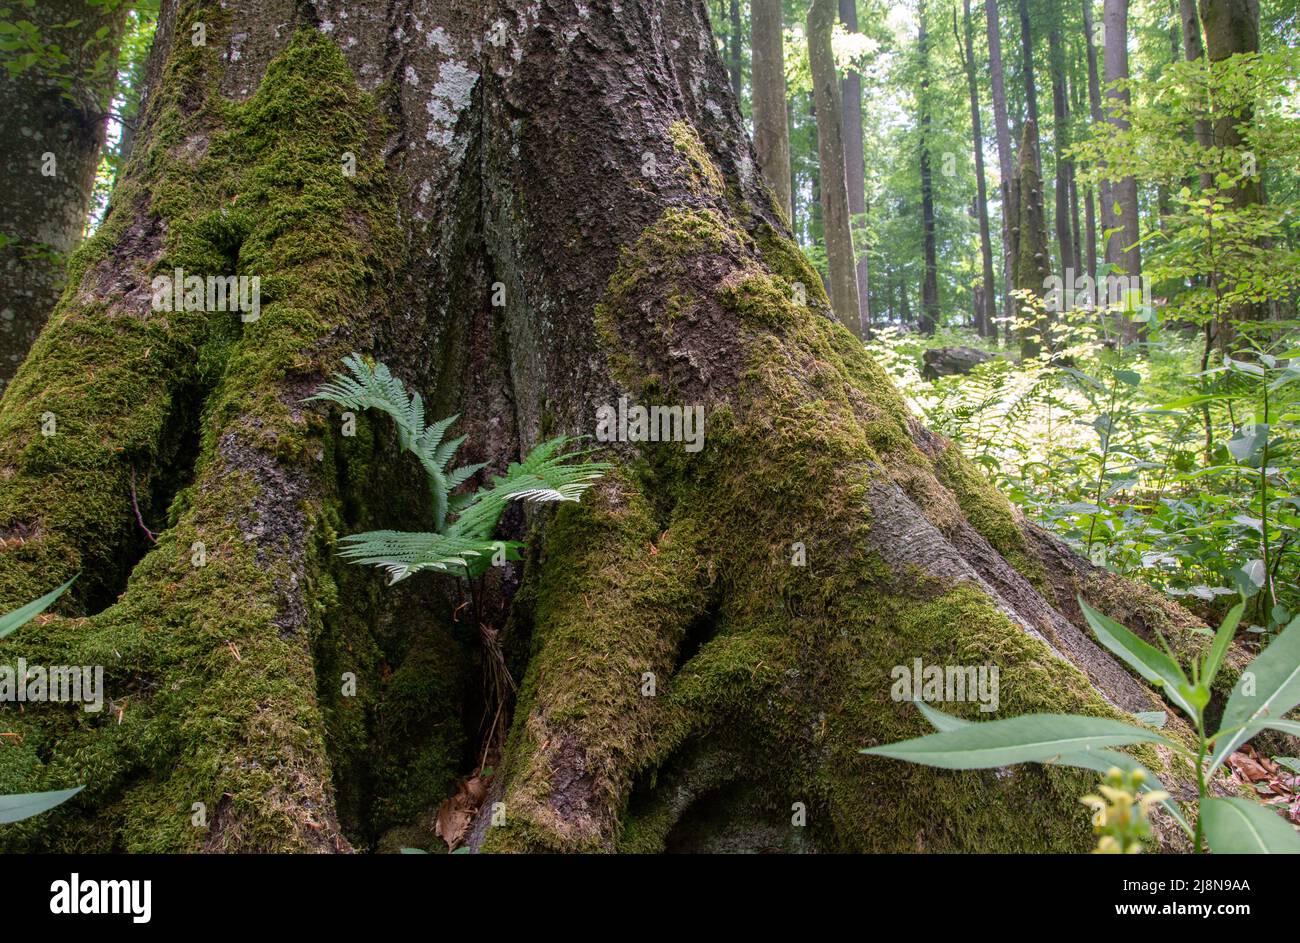 Krokar primeval, foresta vergine a Kočevje, Slovenia. Anno 2021. Foto orizzontale. Foto Stock